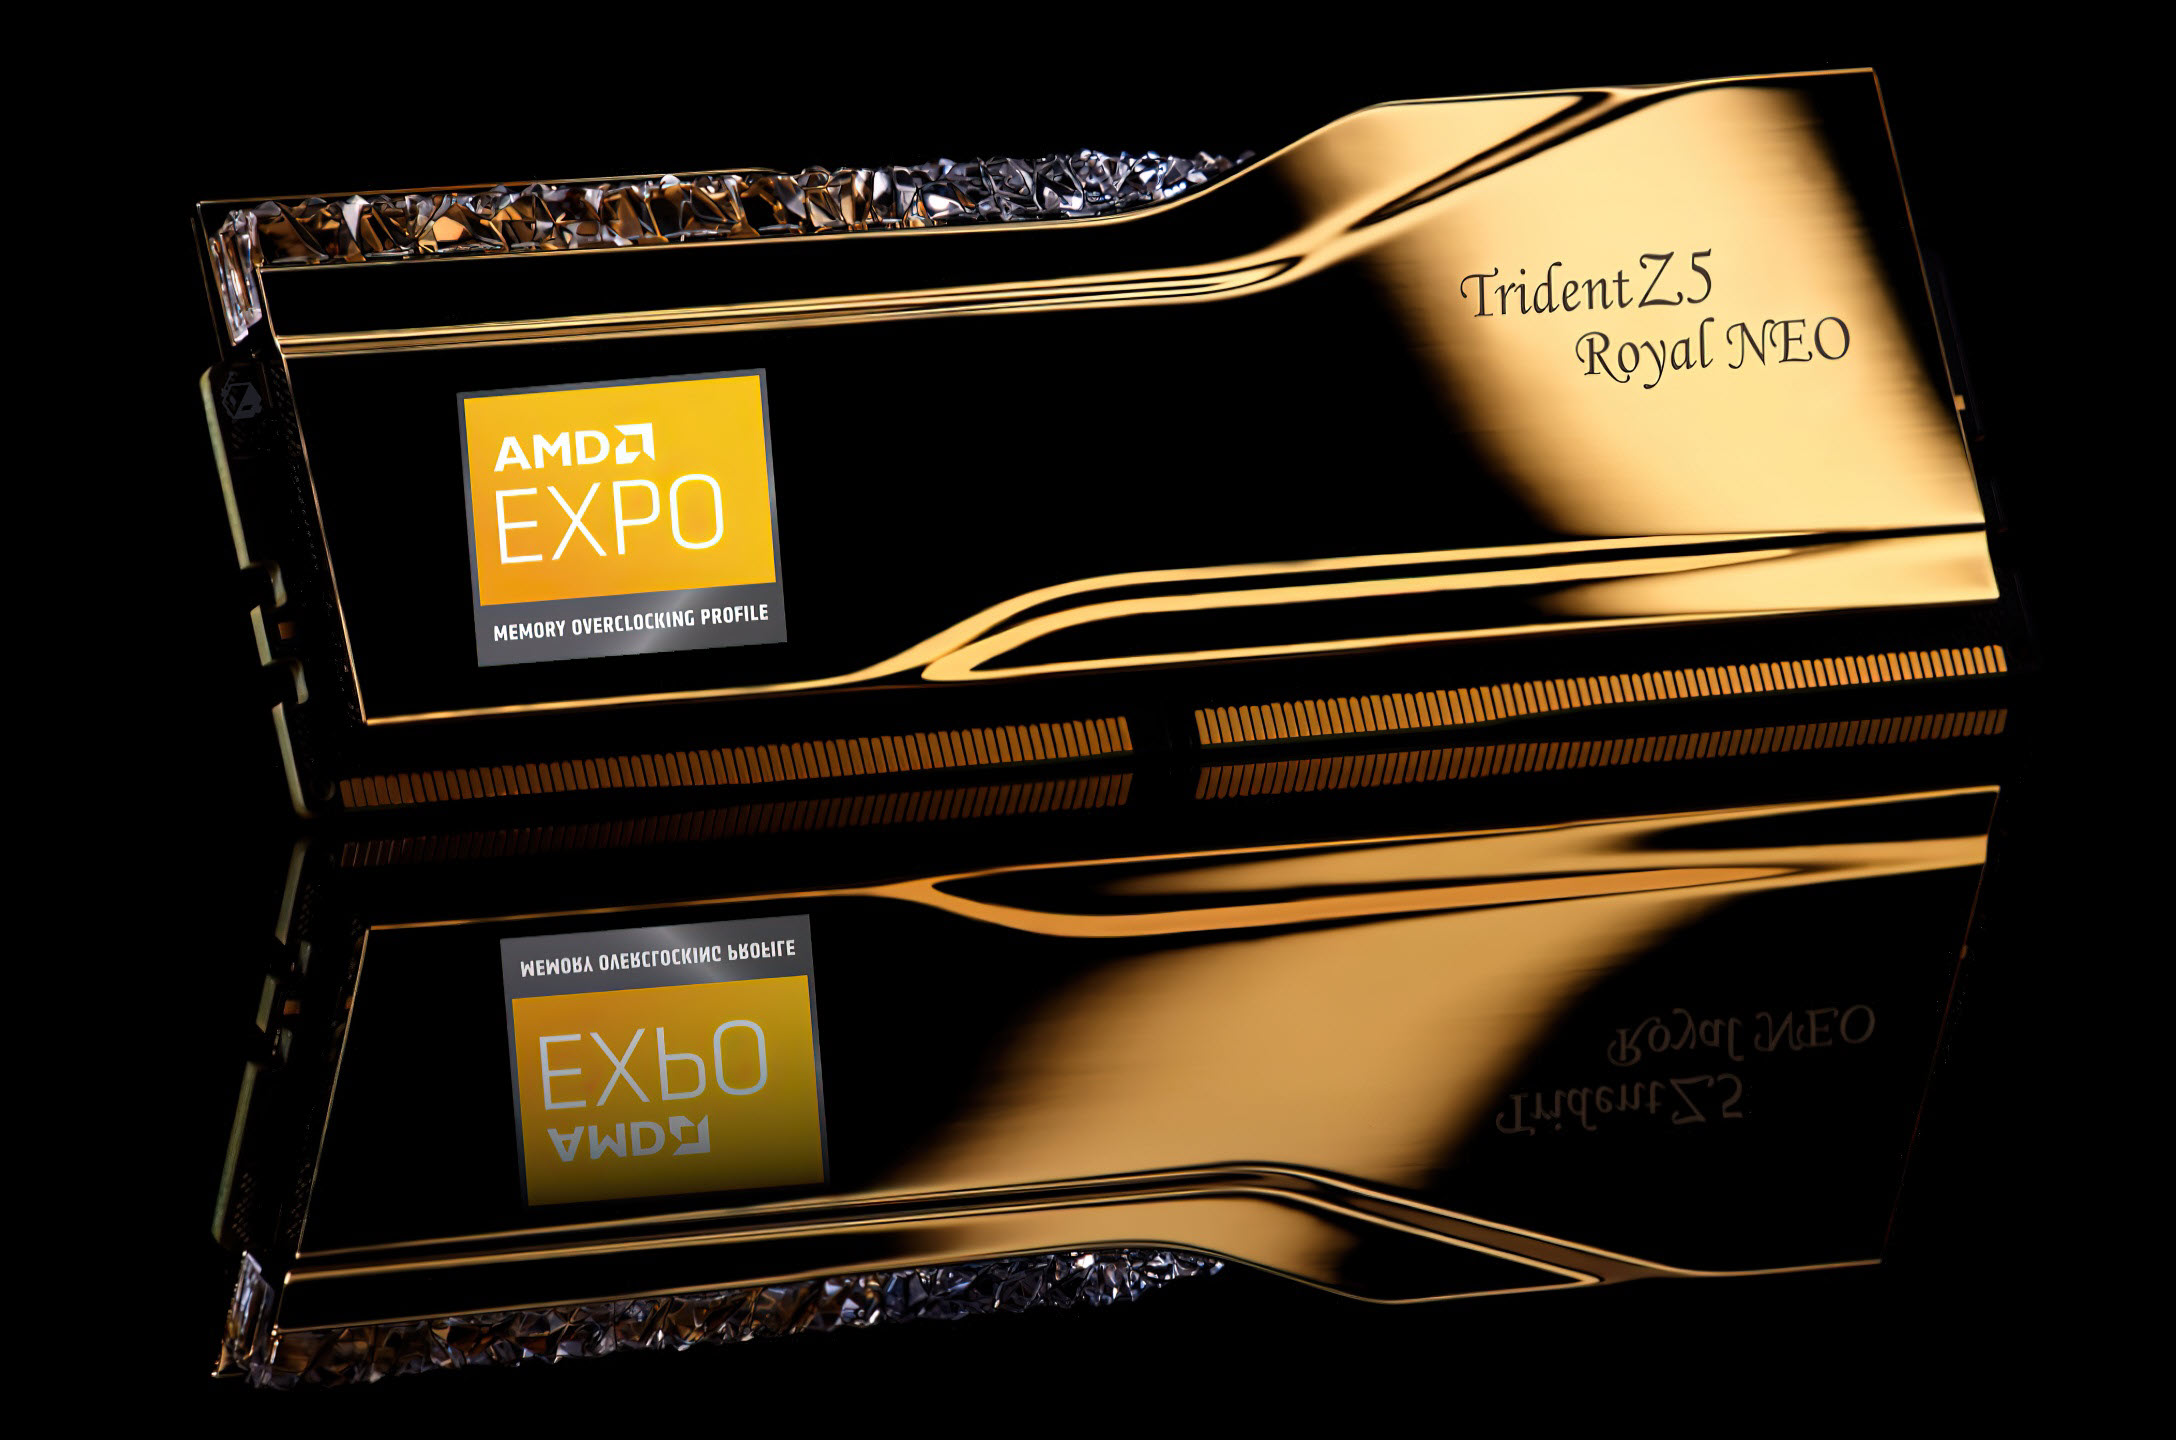 G.Skill کیت های حافظه Trident Z5 Royal Neo DDR5 را معرفی کرد: پشتیبانی AMD EXPO، تا DDR5-8000 و آماده برای پردازنده های Ryzen 9000